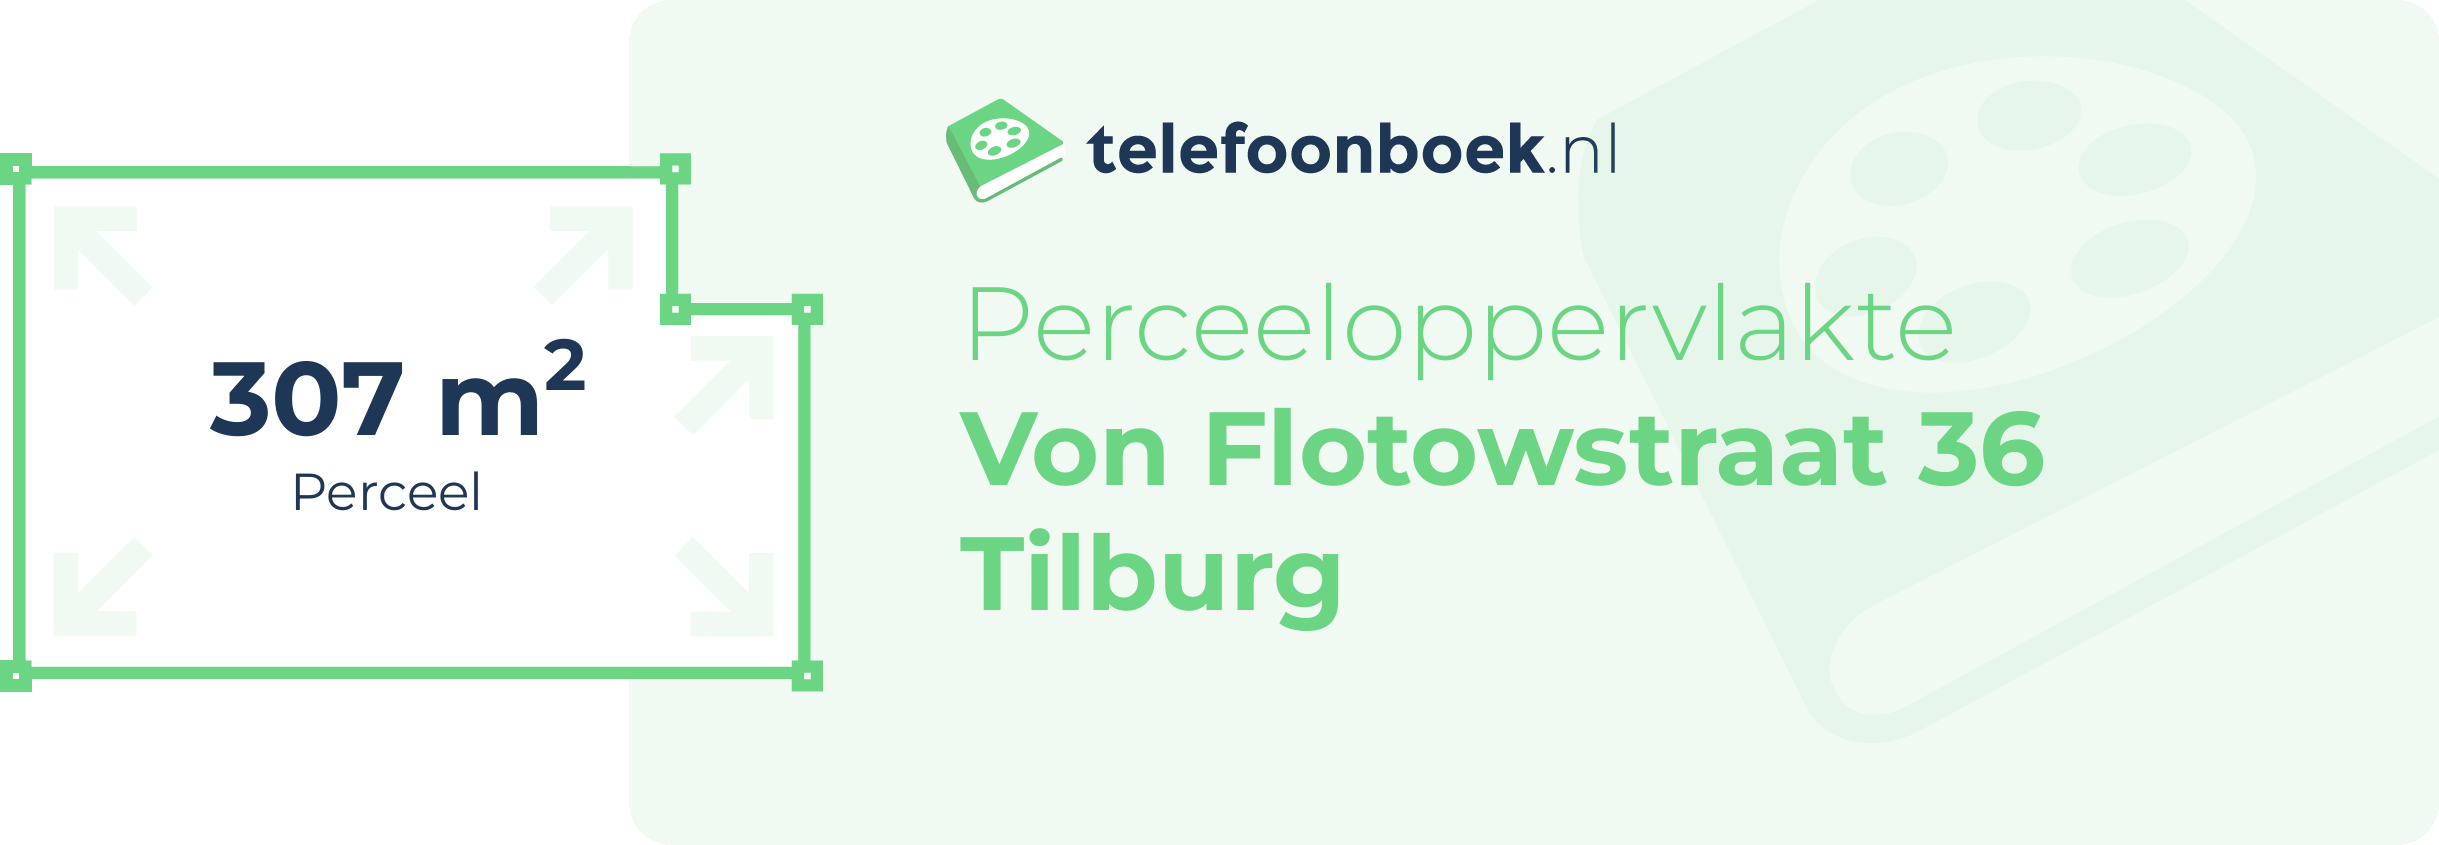 Perceeloppervlakte Von Flotowstraat 36 Tilburg